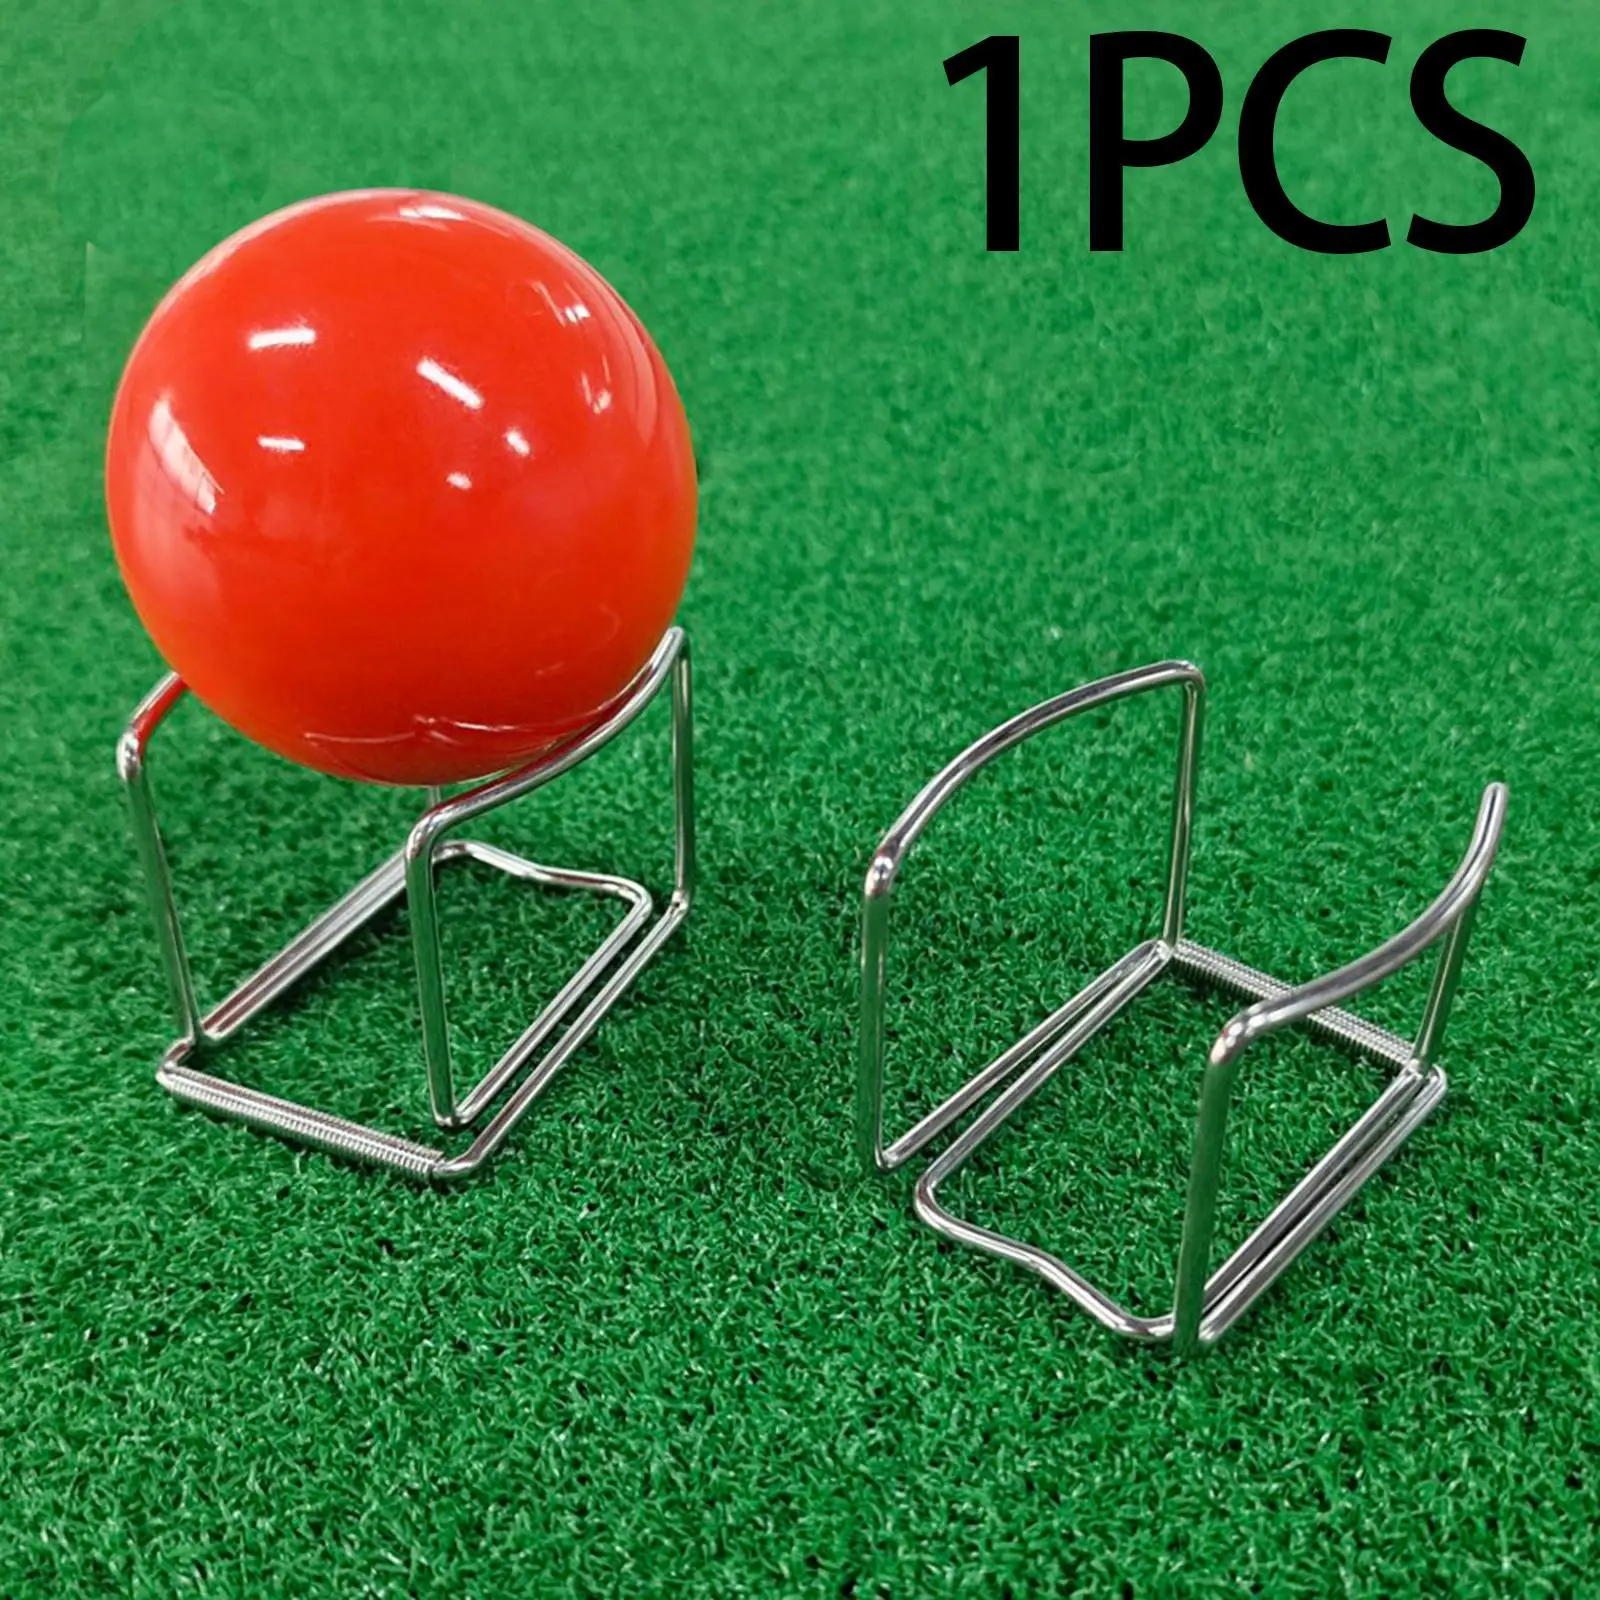 Park Golf Ball Clip Golf Supplies Park Golf Ball Tee Clip Park Golf Ball for Practice